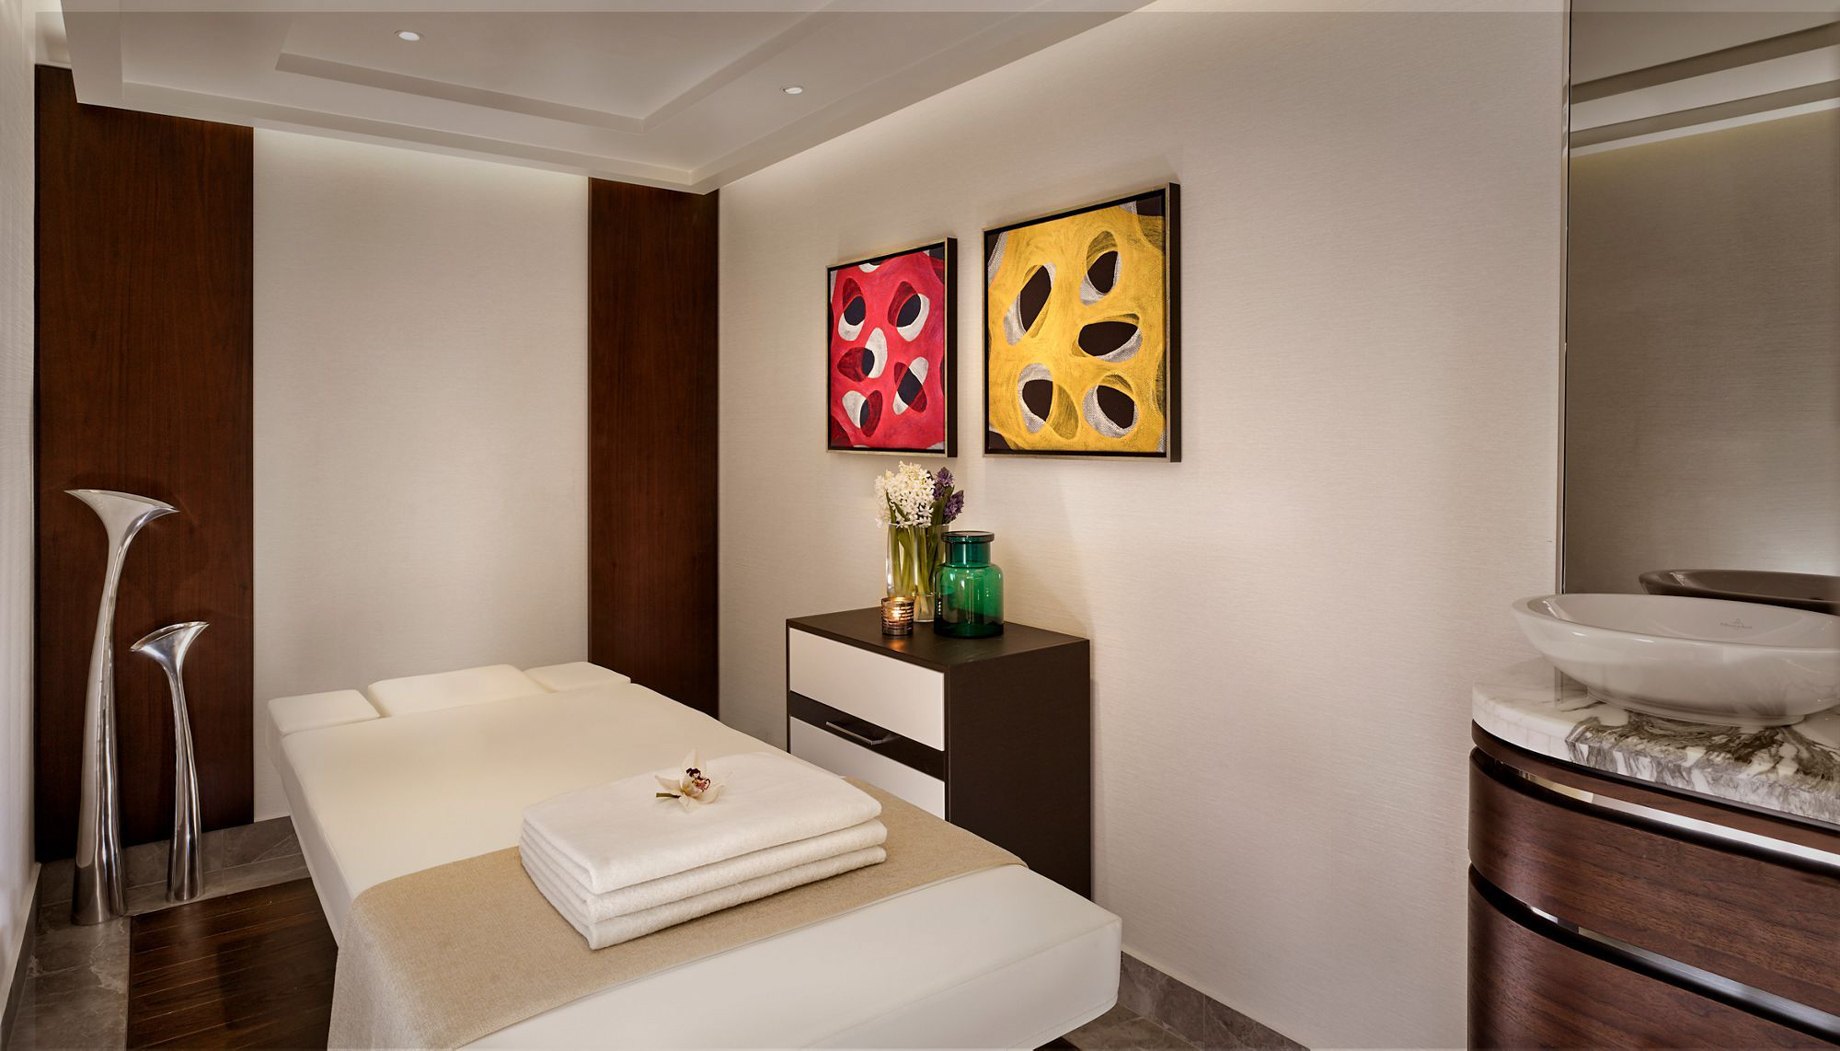 The Ritz-Carlton, Budapest Hotel – Budapest, Hungary – Spa Treatment Room